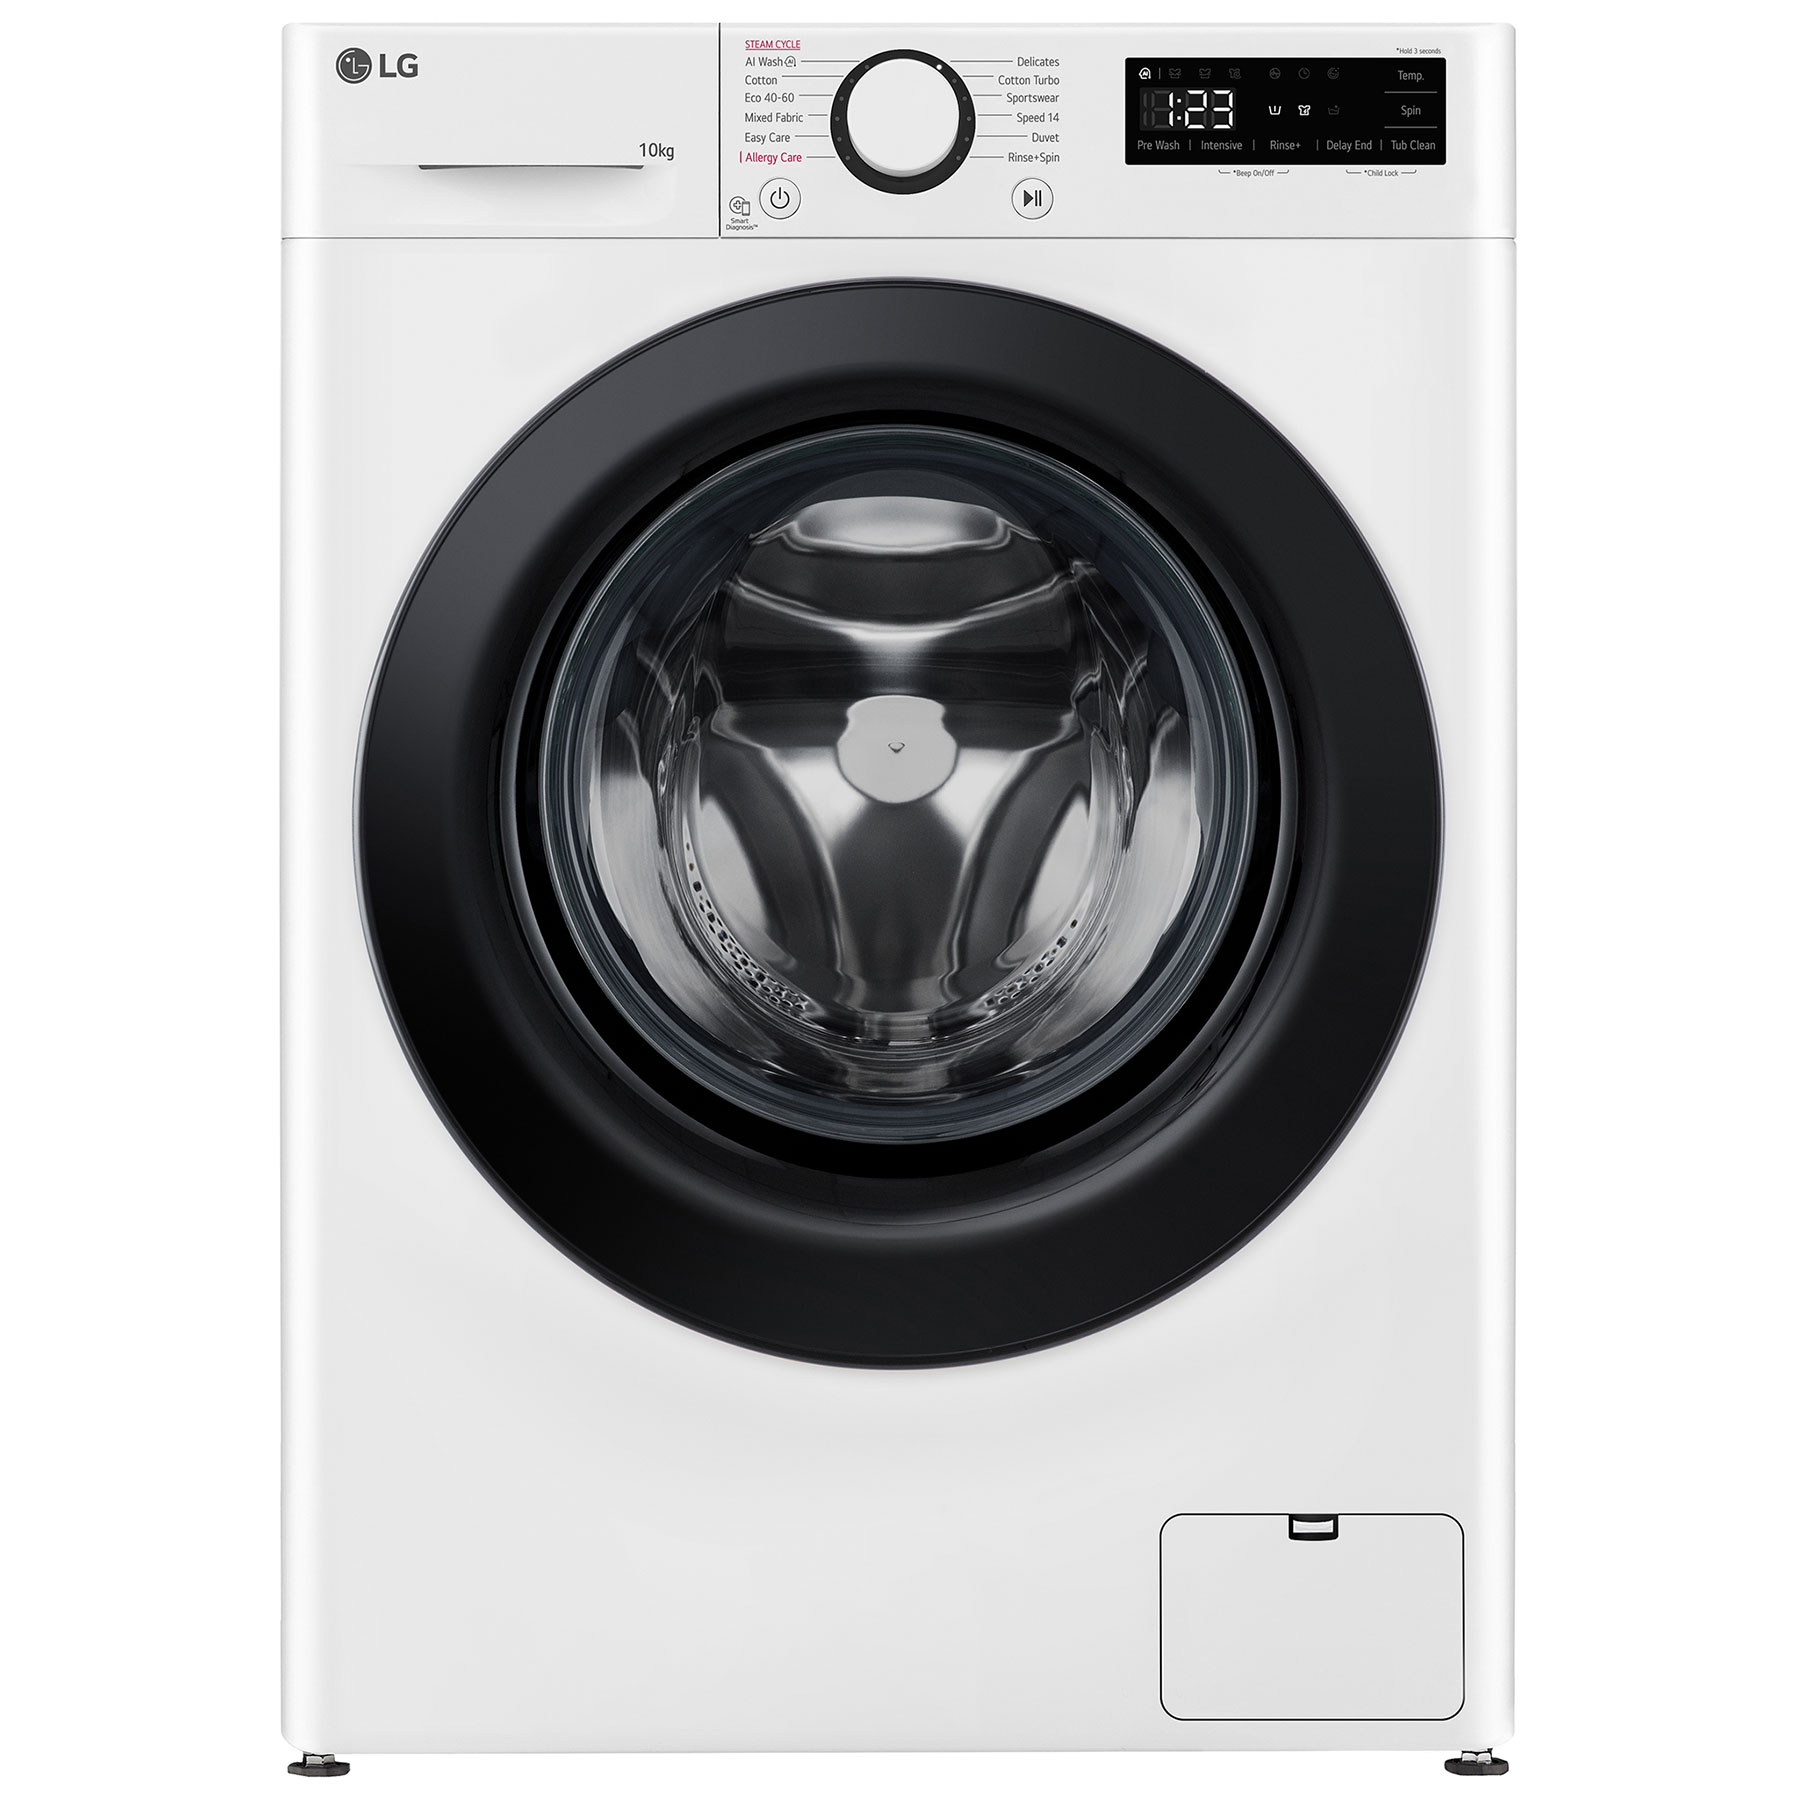 LG F4Y510WBLN1 Washing Machine in White 1400rpm 10kg A Rated